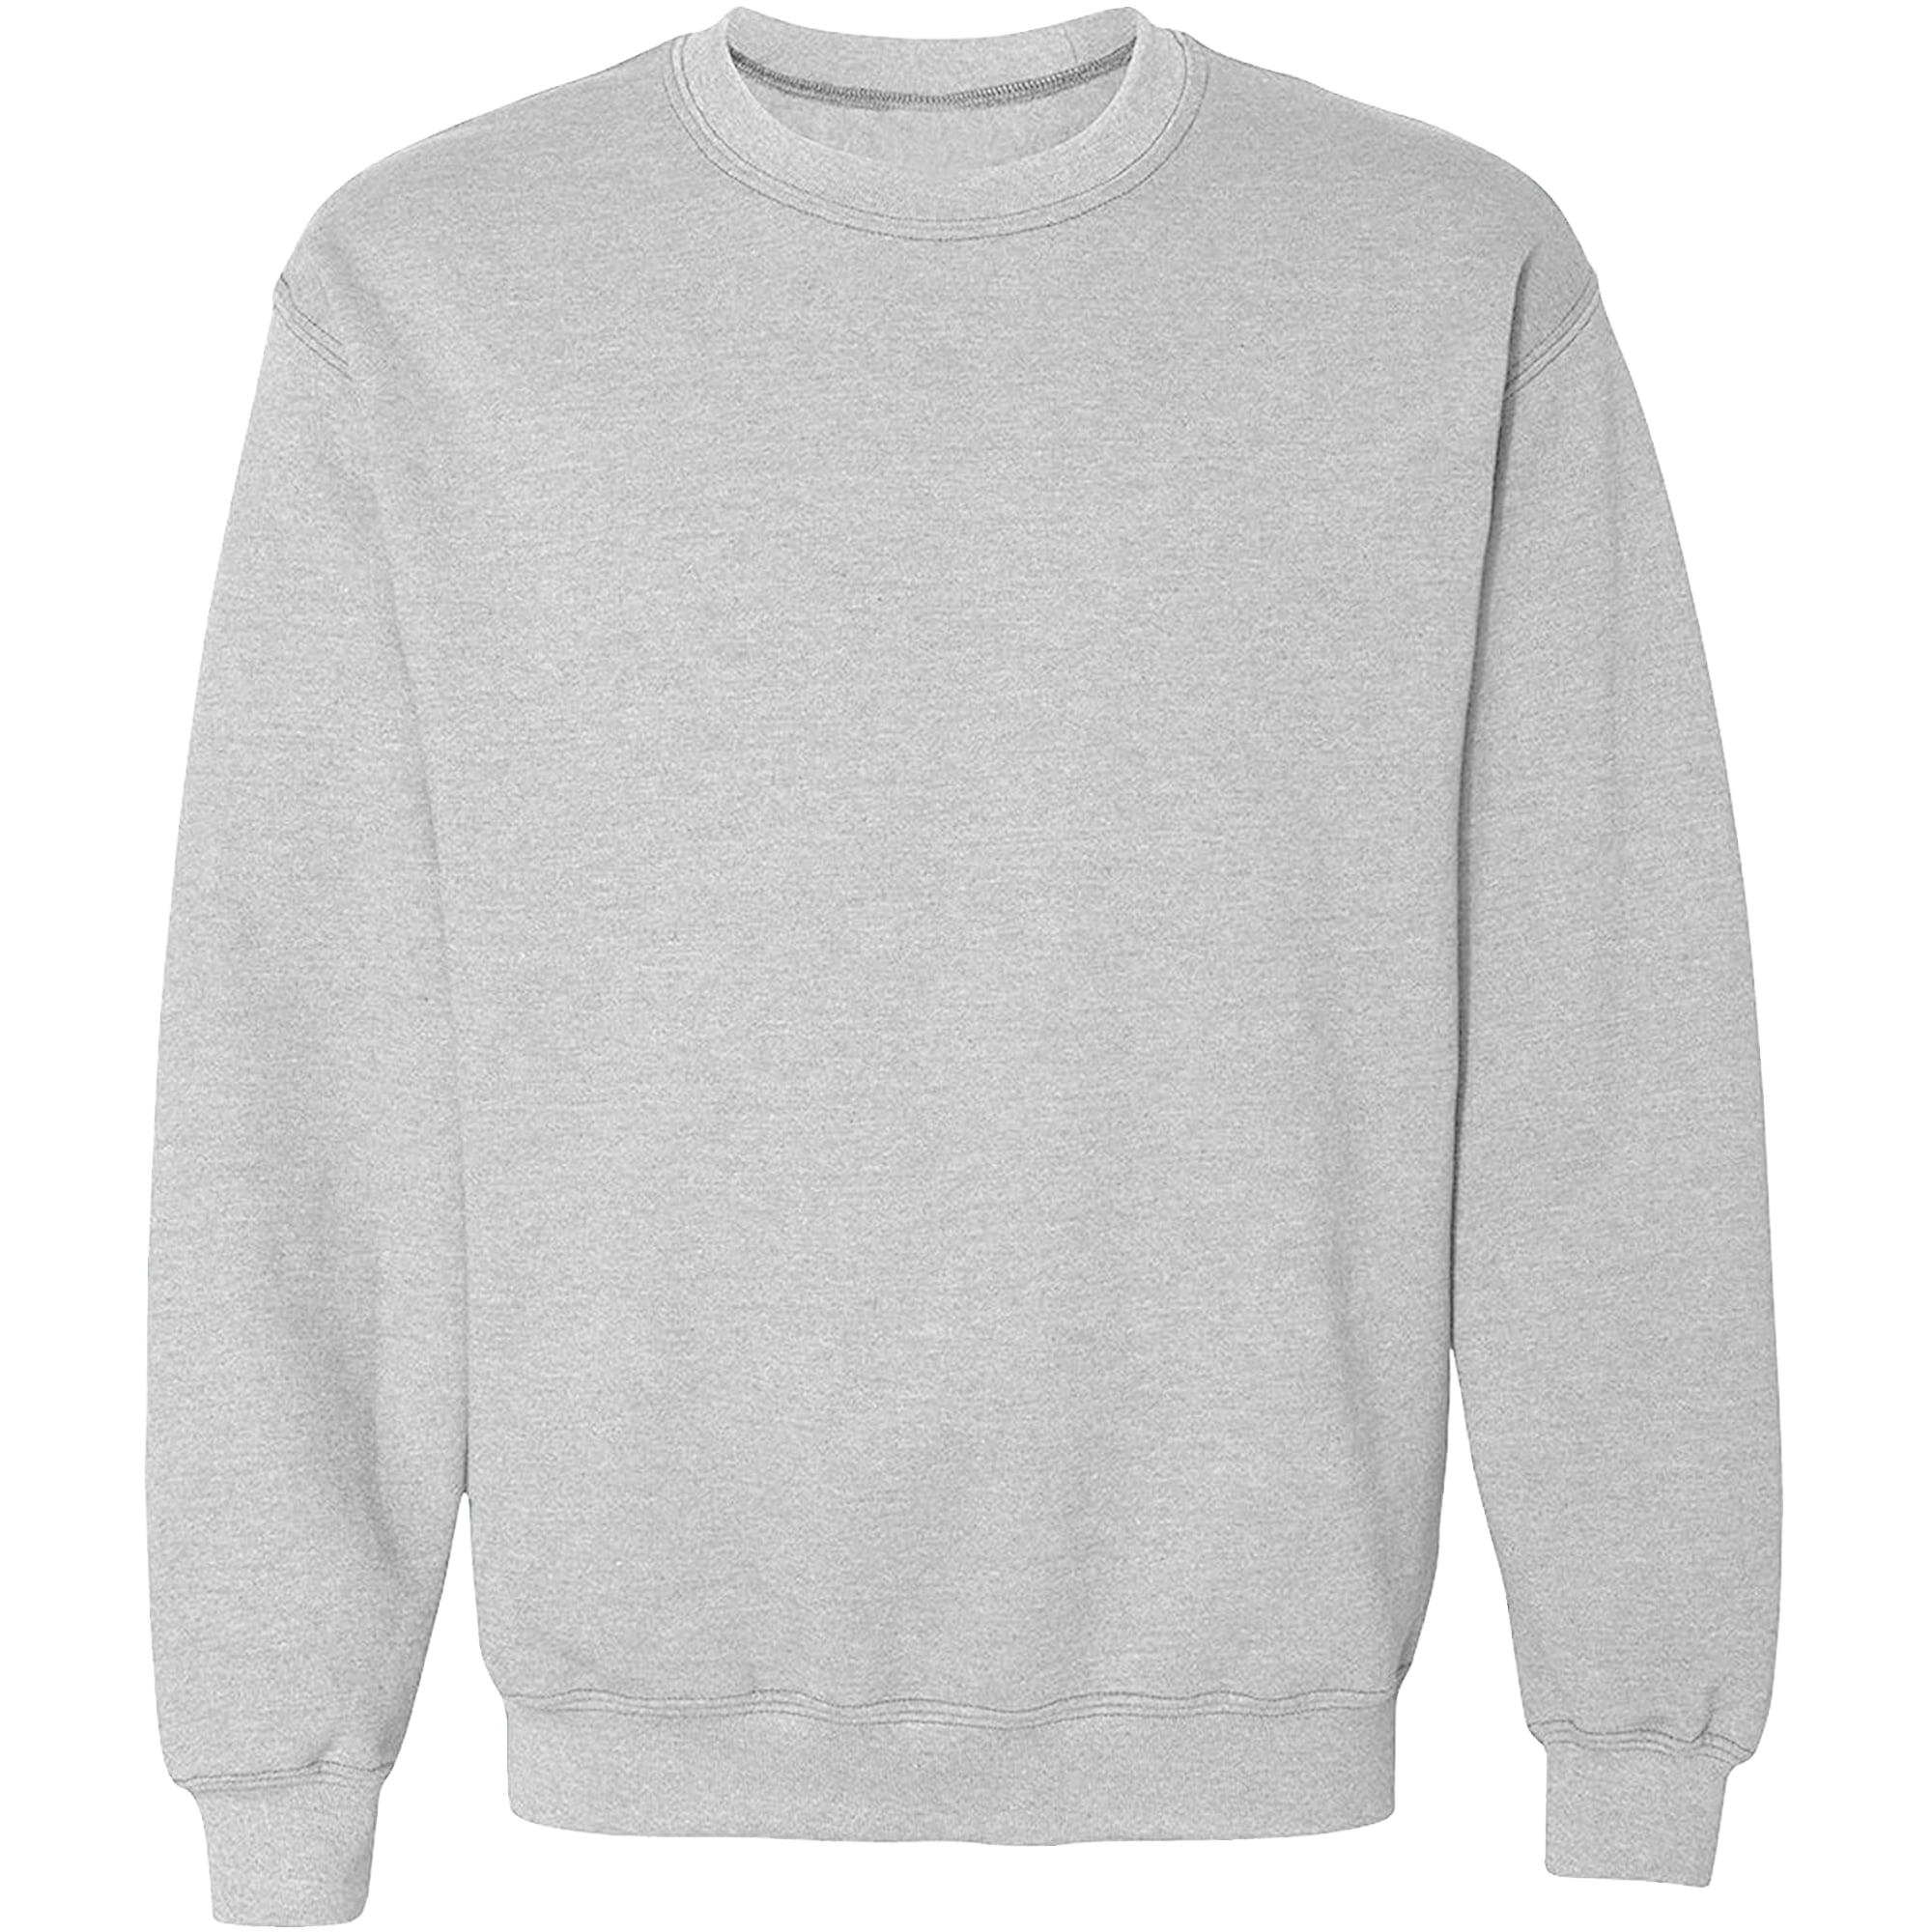 Radyan's Adult Pullover Fleece Sweatshirt, Heather Gray, 4X-Large ...